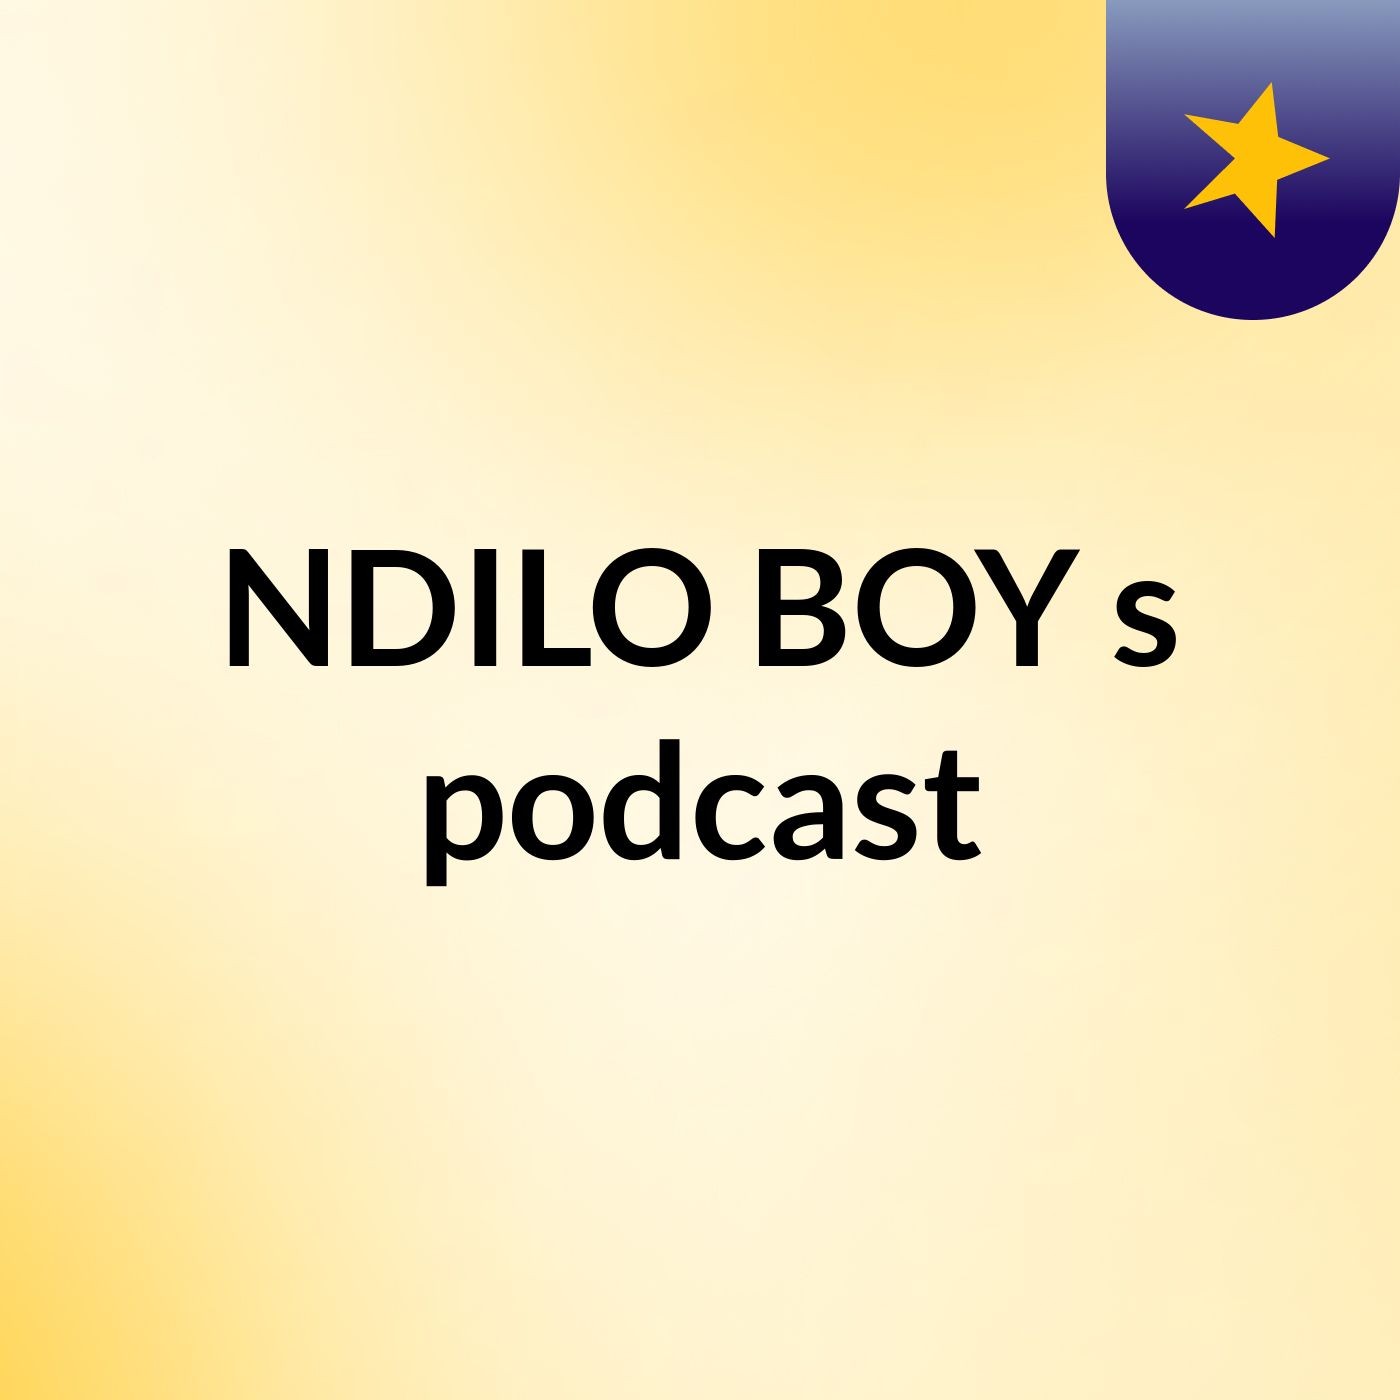 NDILO BOY's podcast